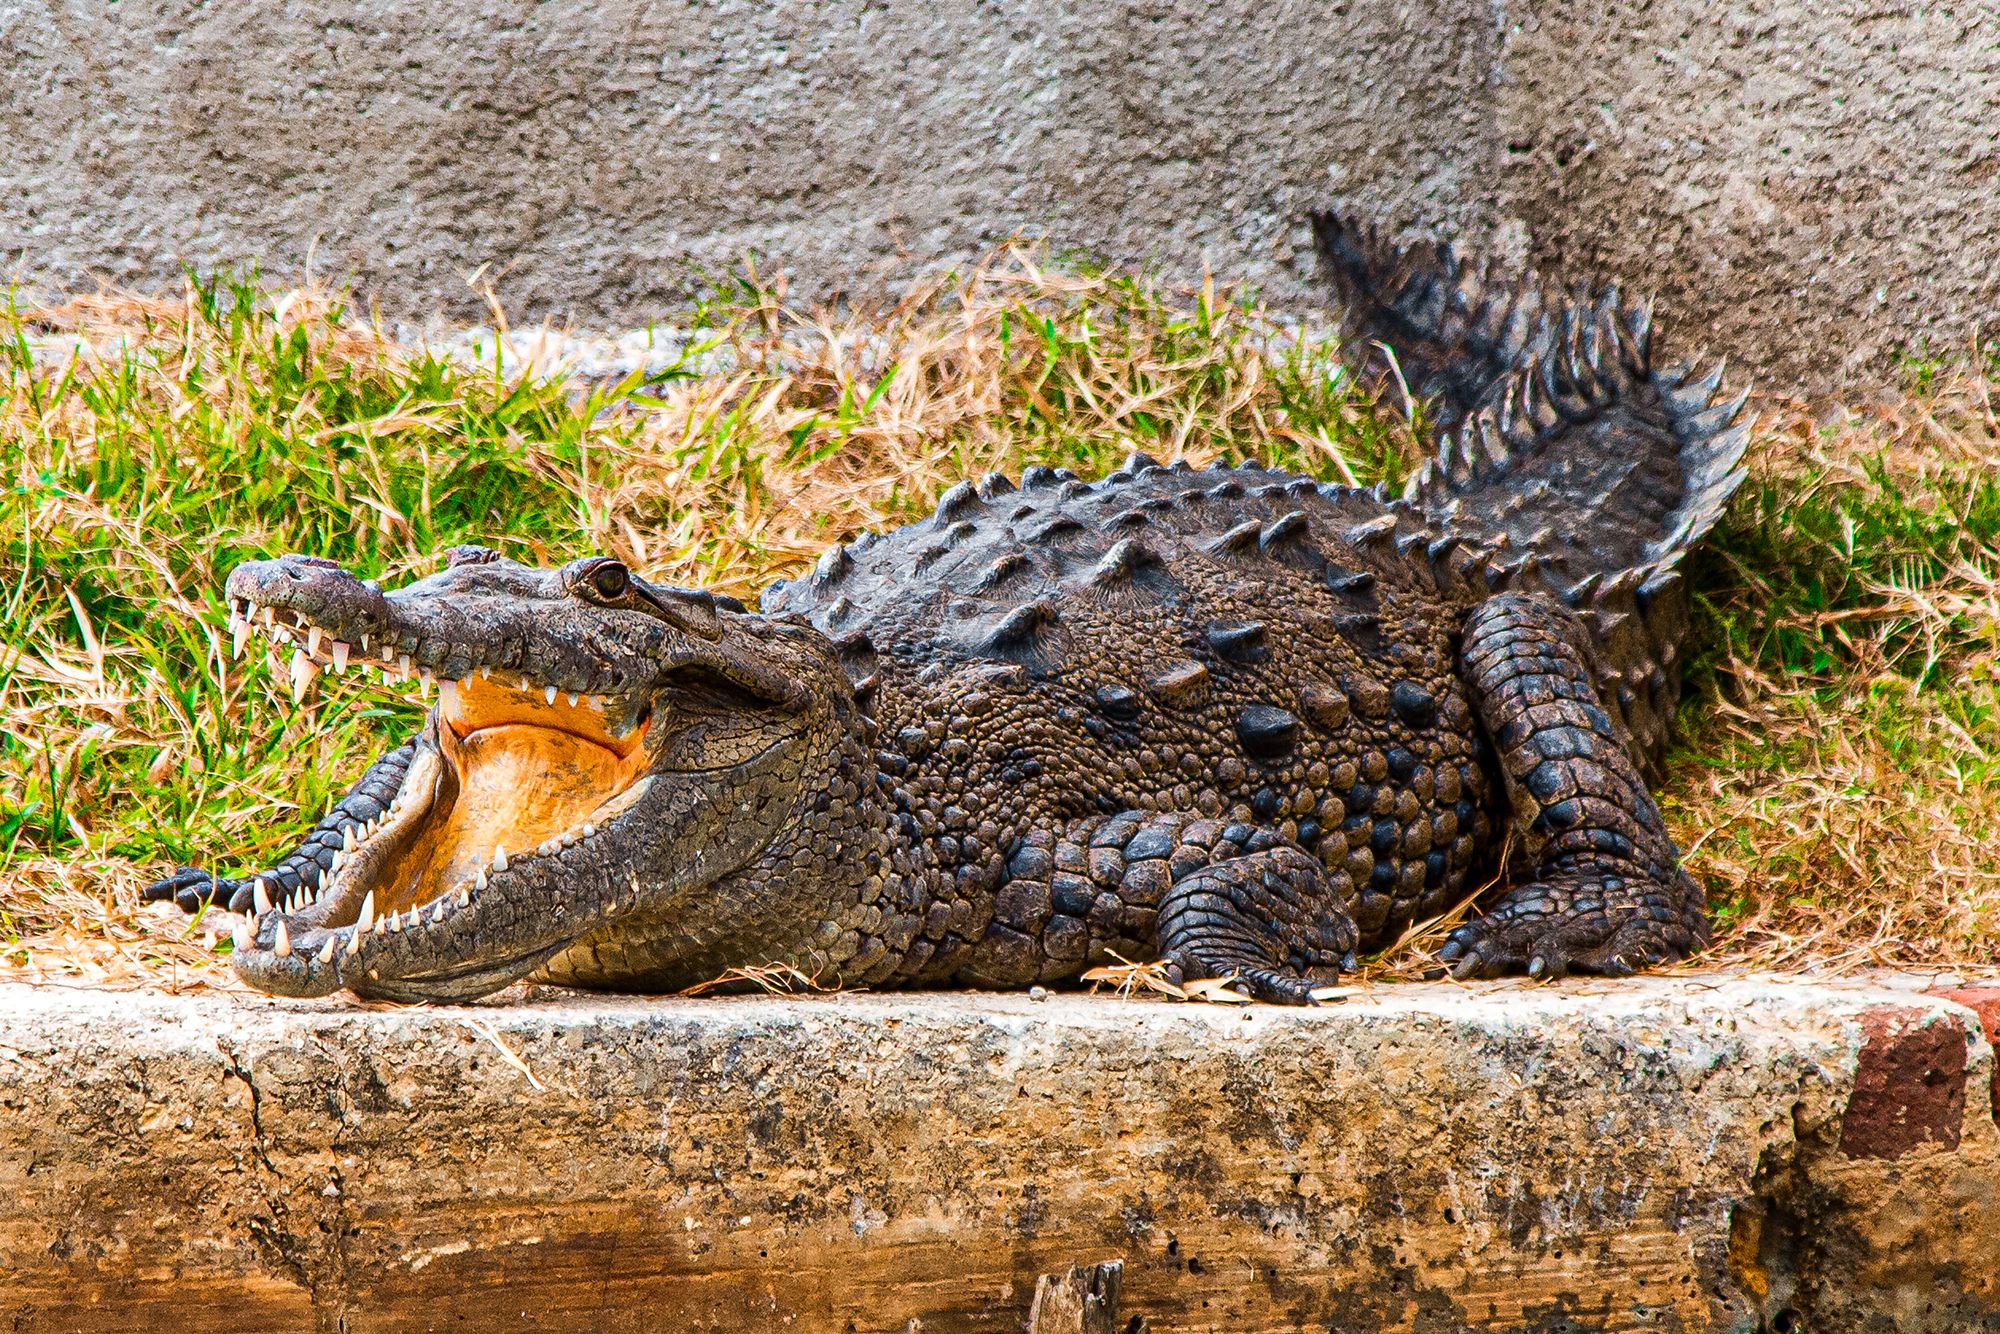 Jamaica Black River Crocodile